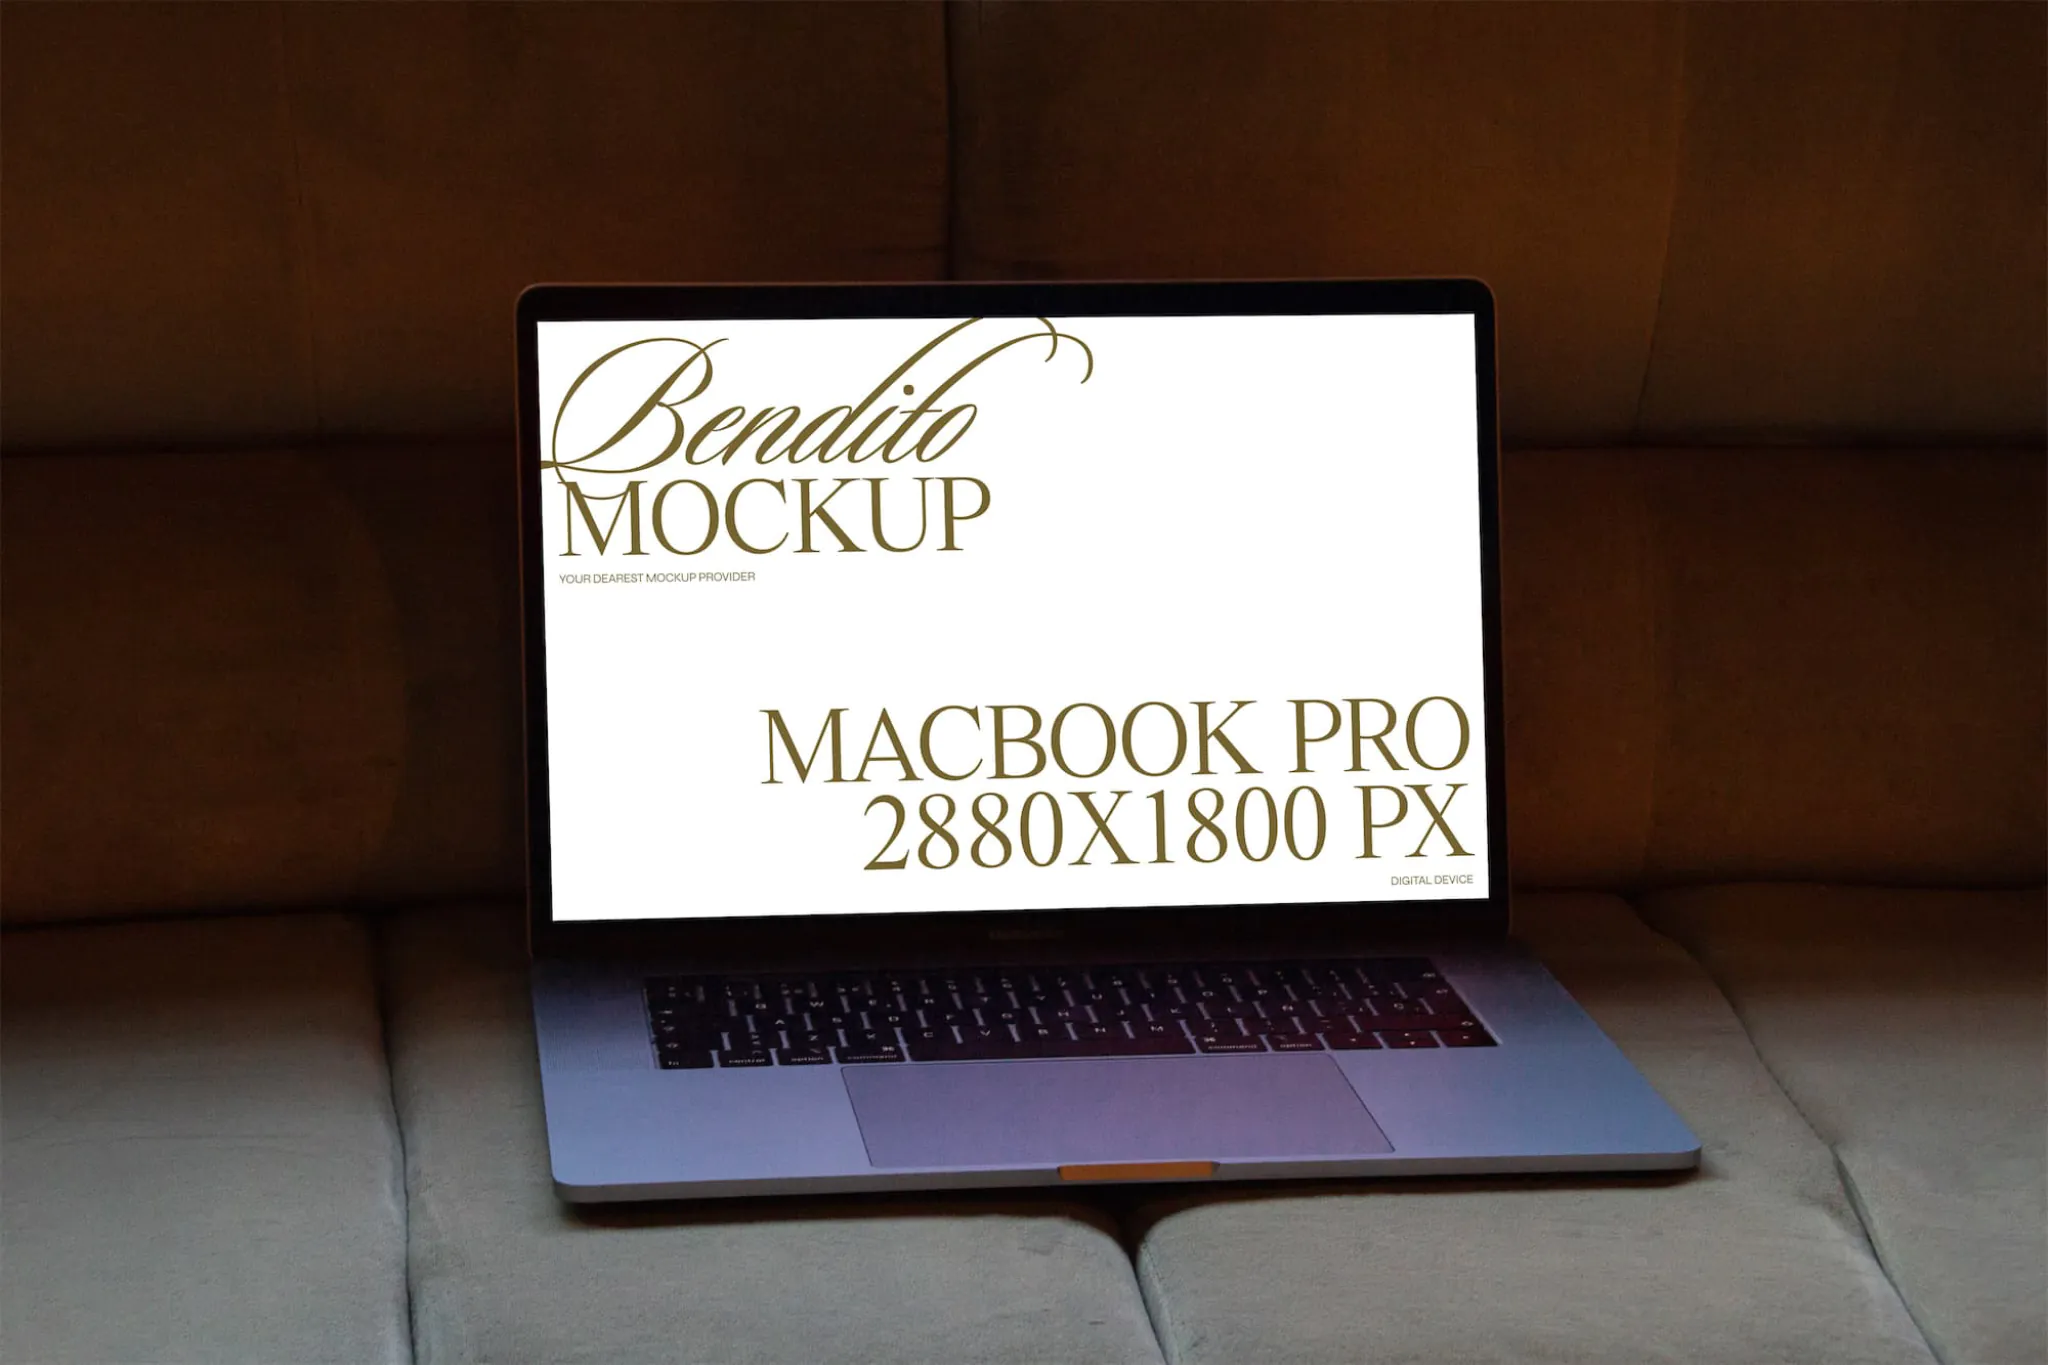 Macbook mockup on beige velvet fabric background.